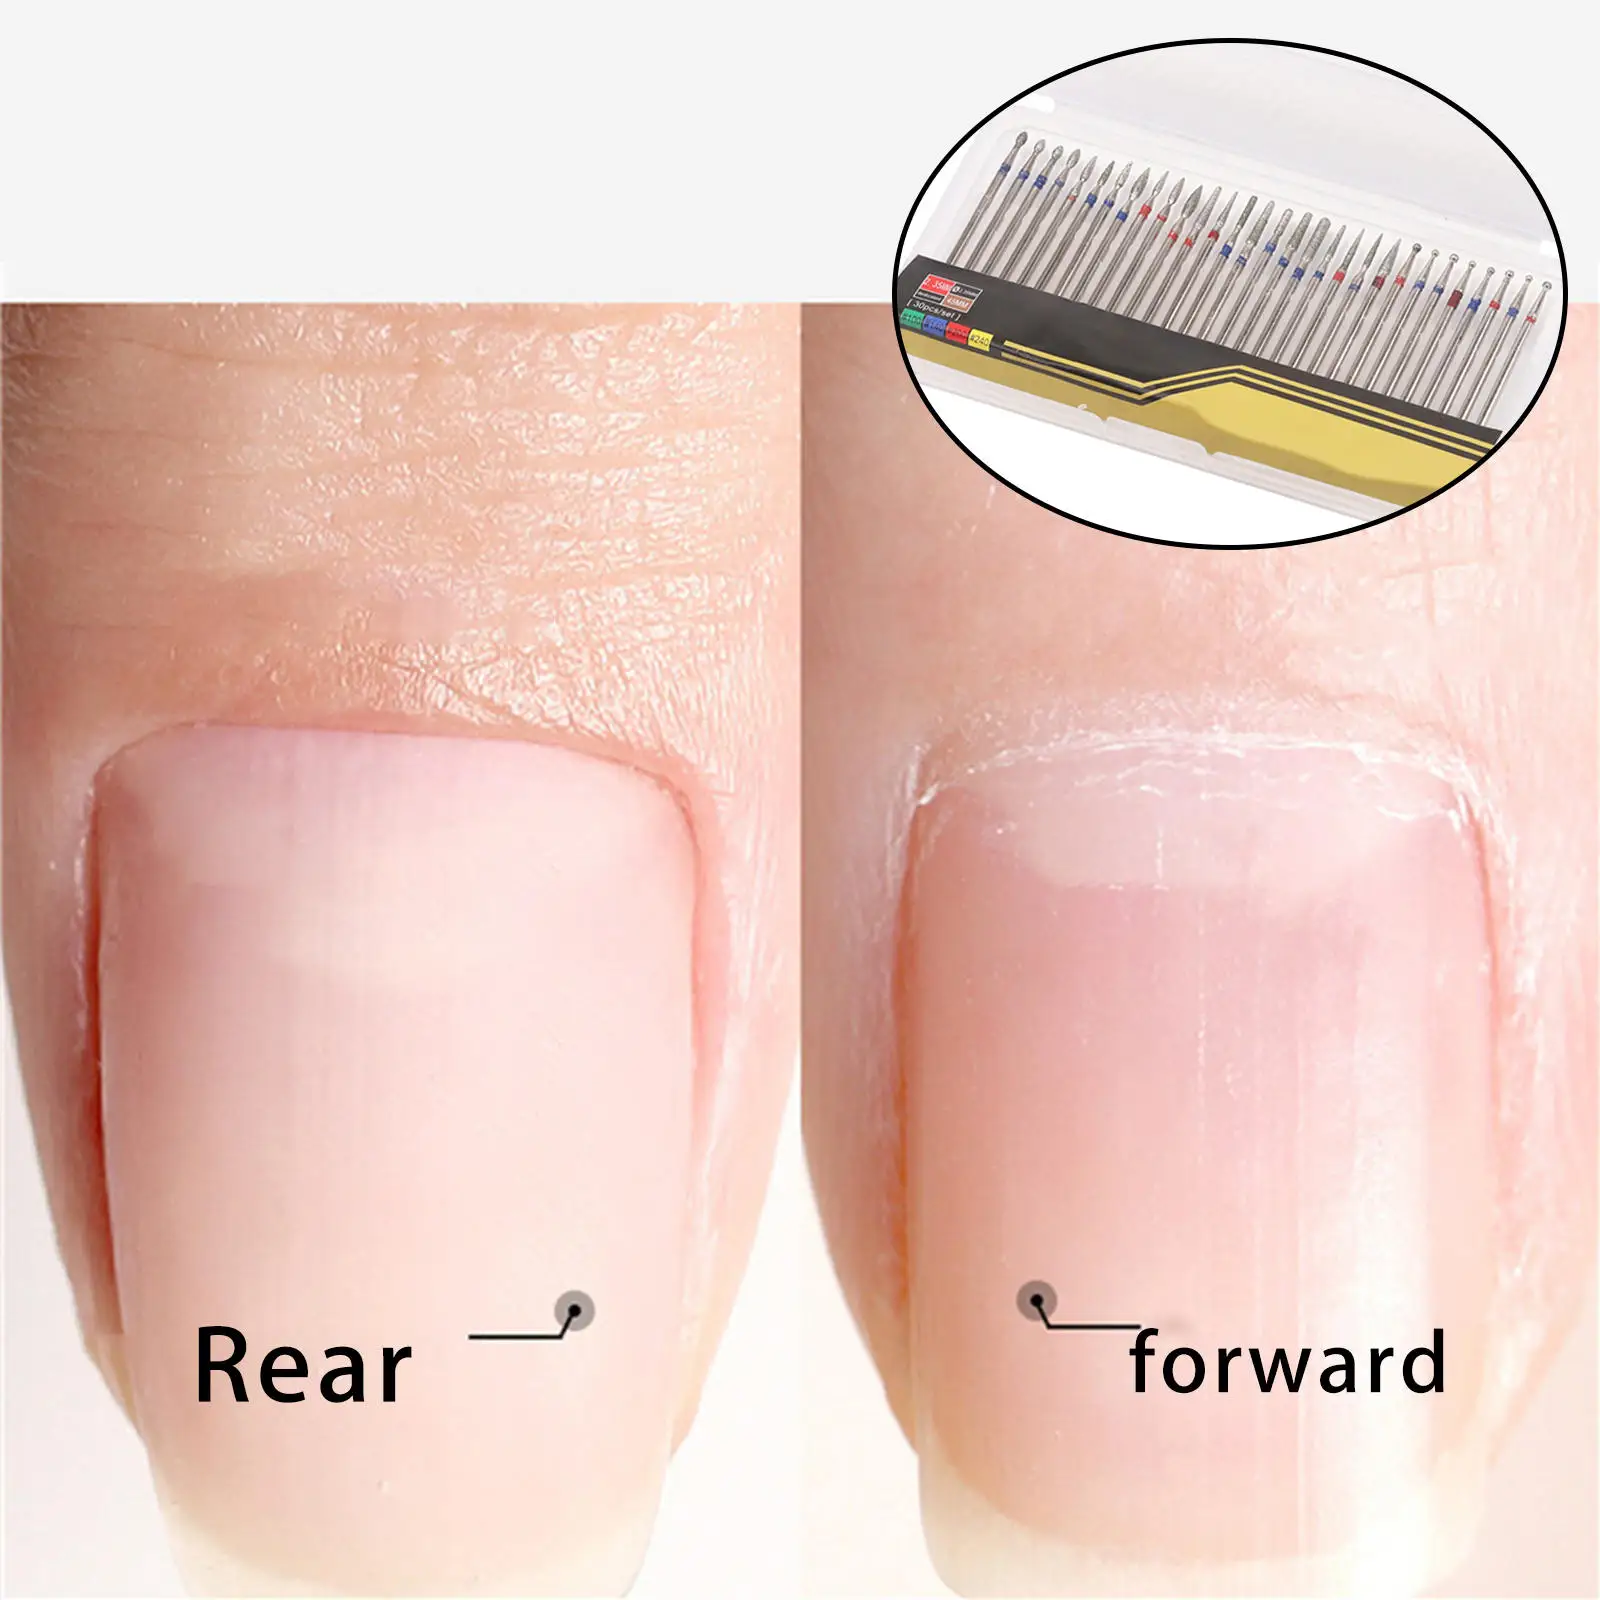 30pcs Nail Drill Bits Kits for Remove Polishing Poly Acrylic Nails Cuticles Manicure Home Use Spa Professional